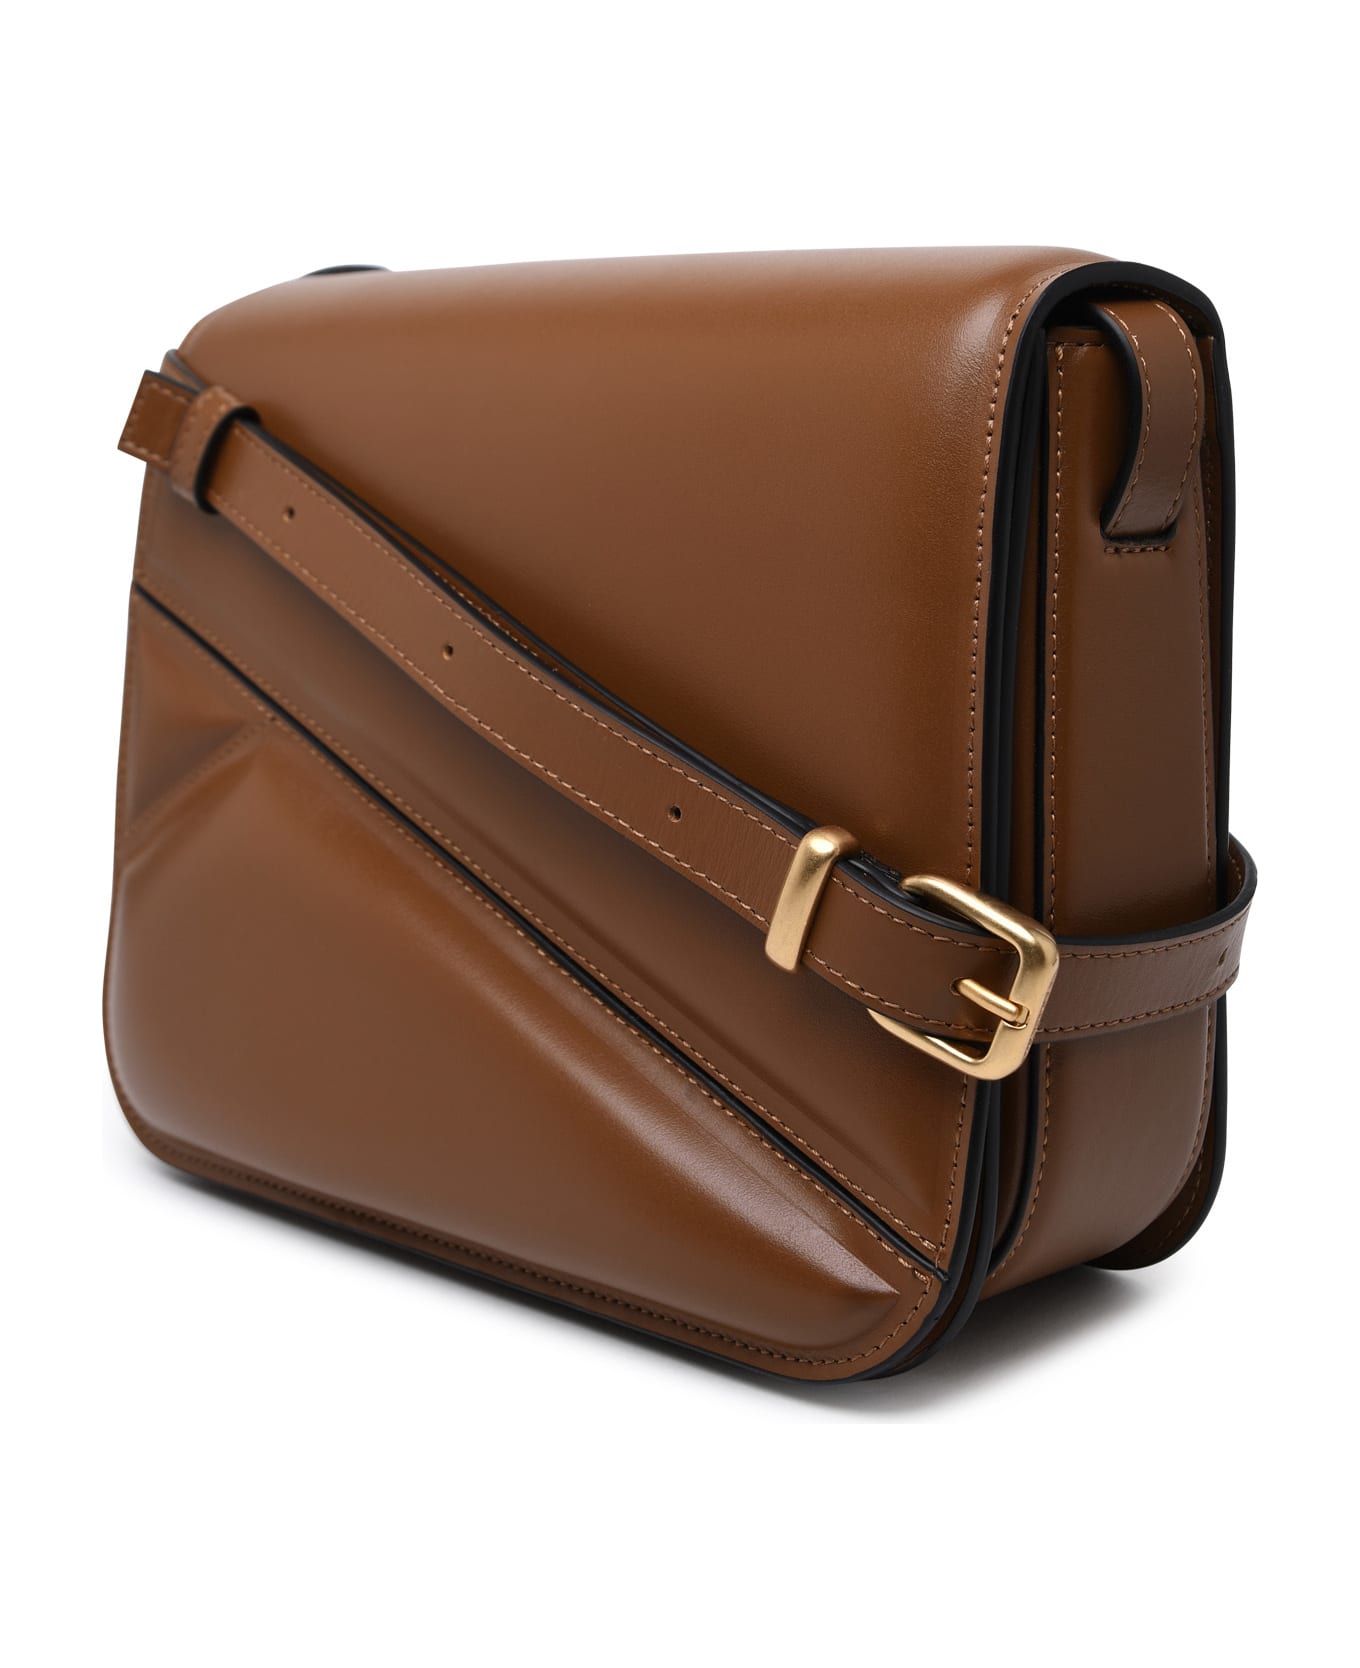 Wandler 'oscar' Brown Leather Bag - Beige ショルダーバッグ